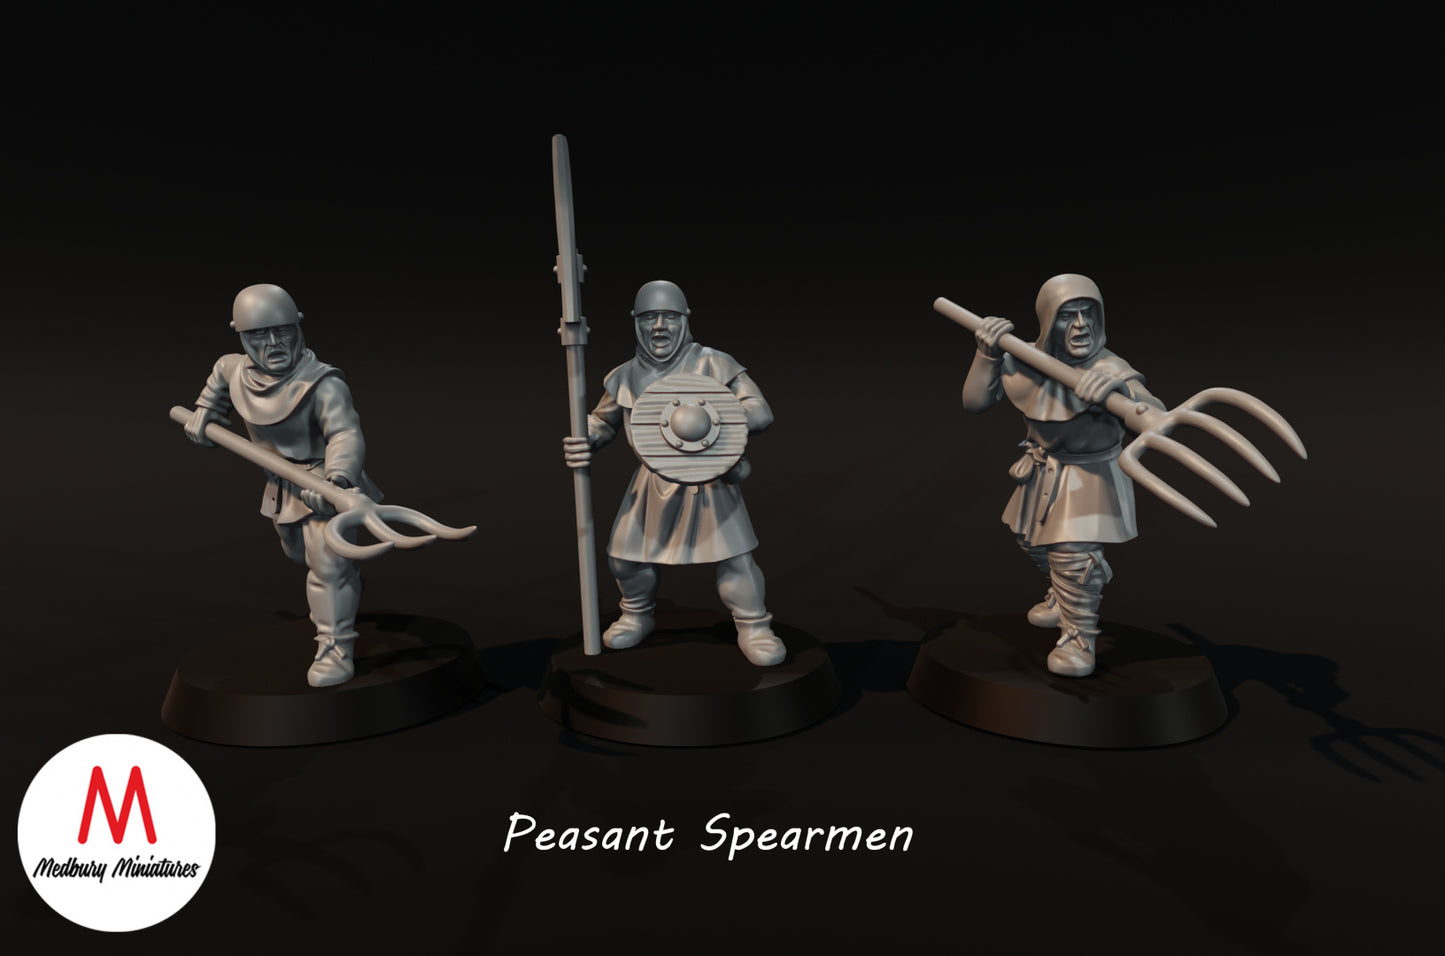 Peasant Spearmen